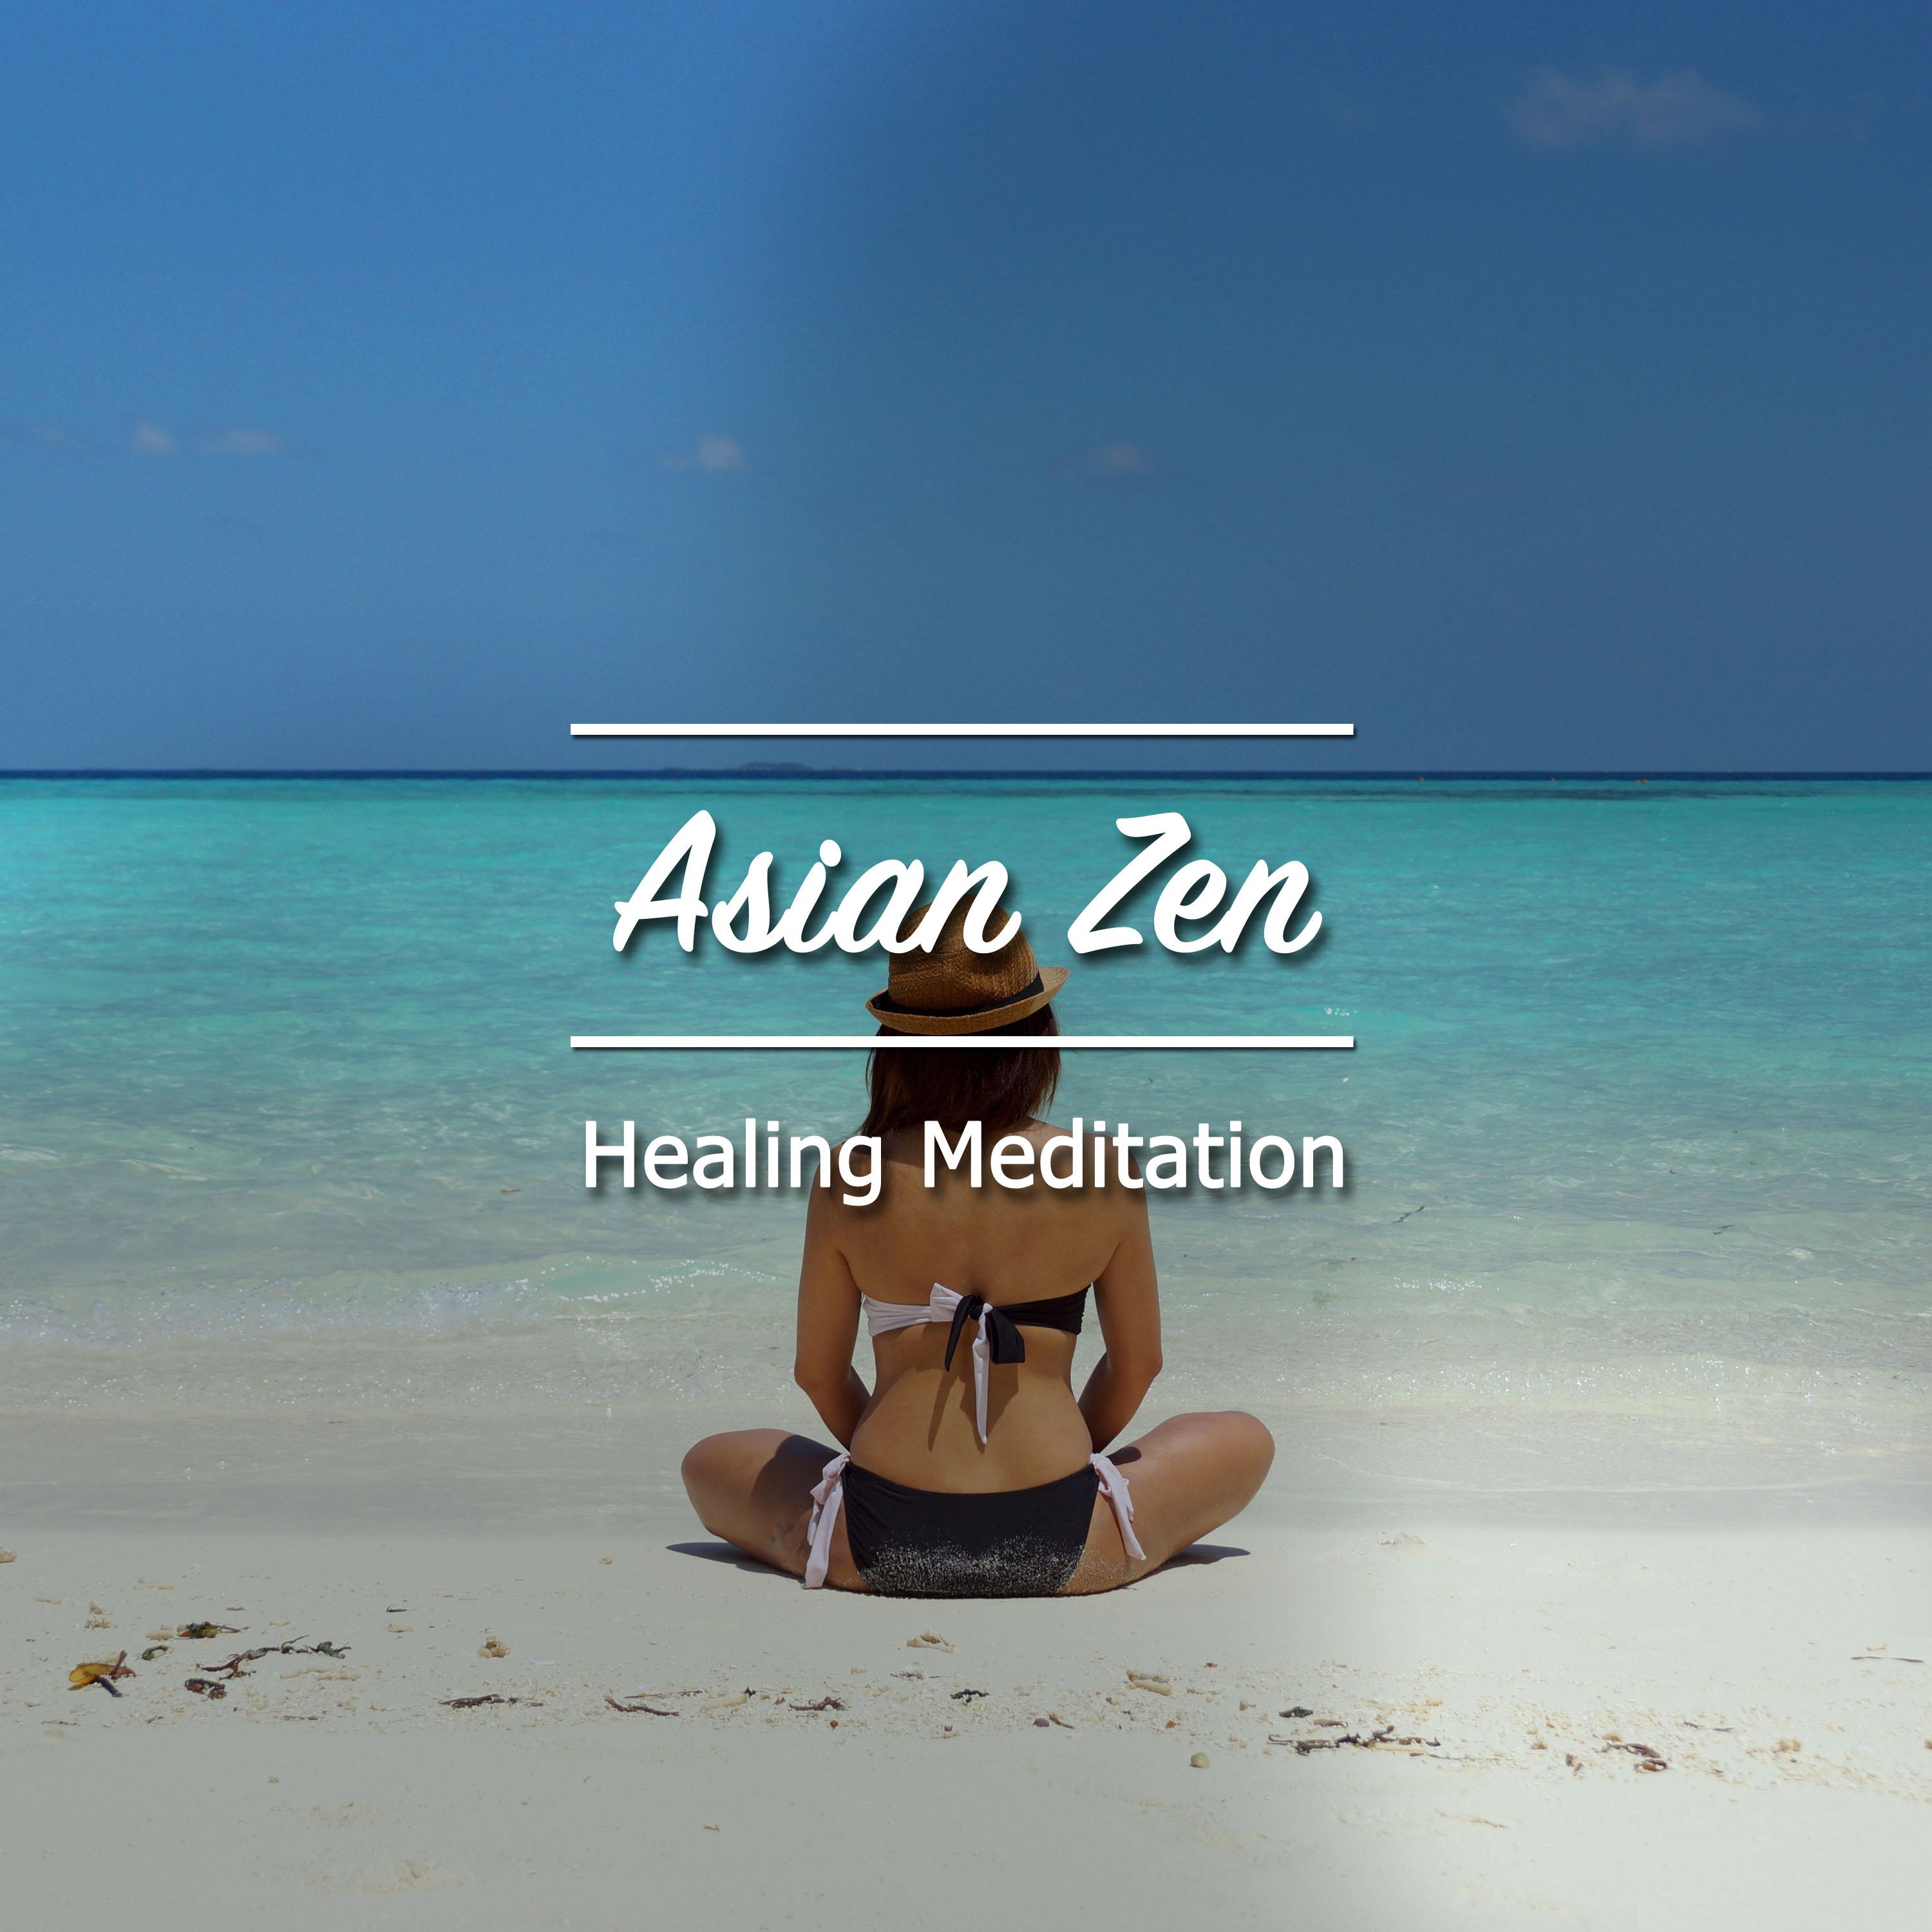 16 Asian Zen and Healing Meditation Compilation